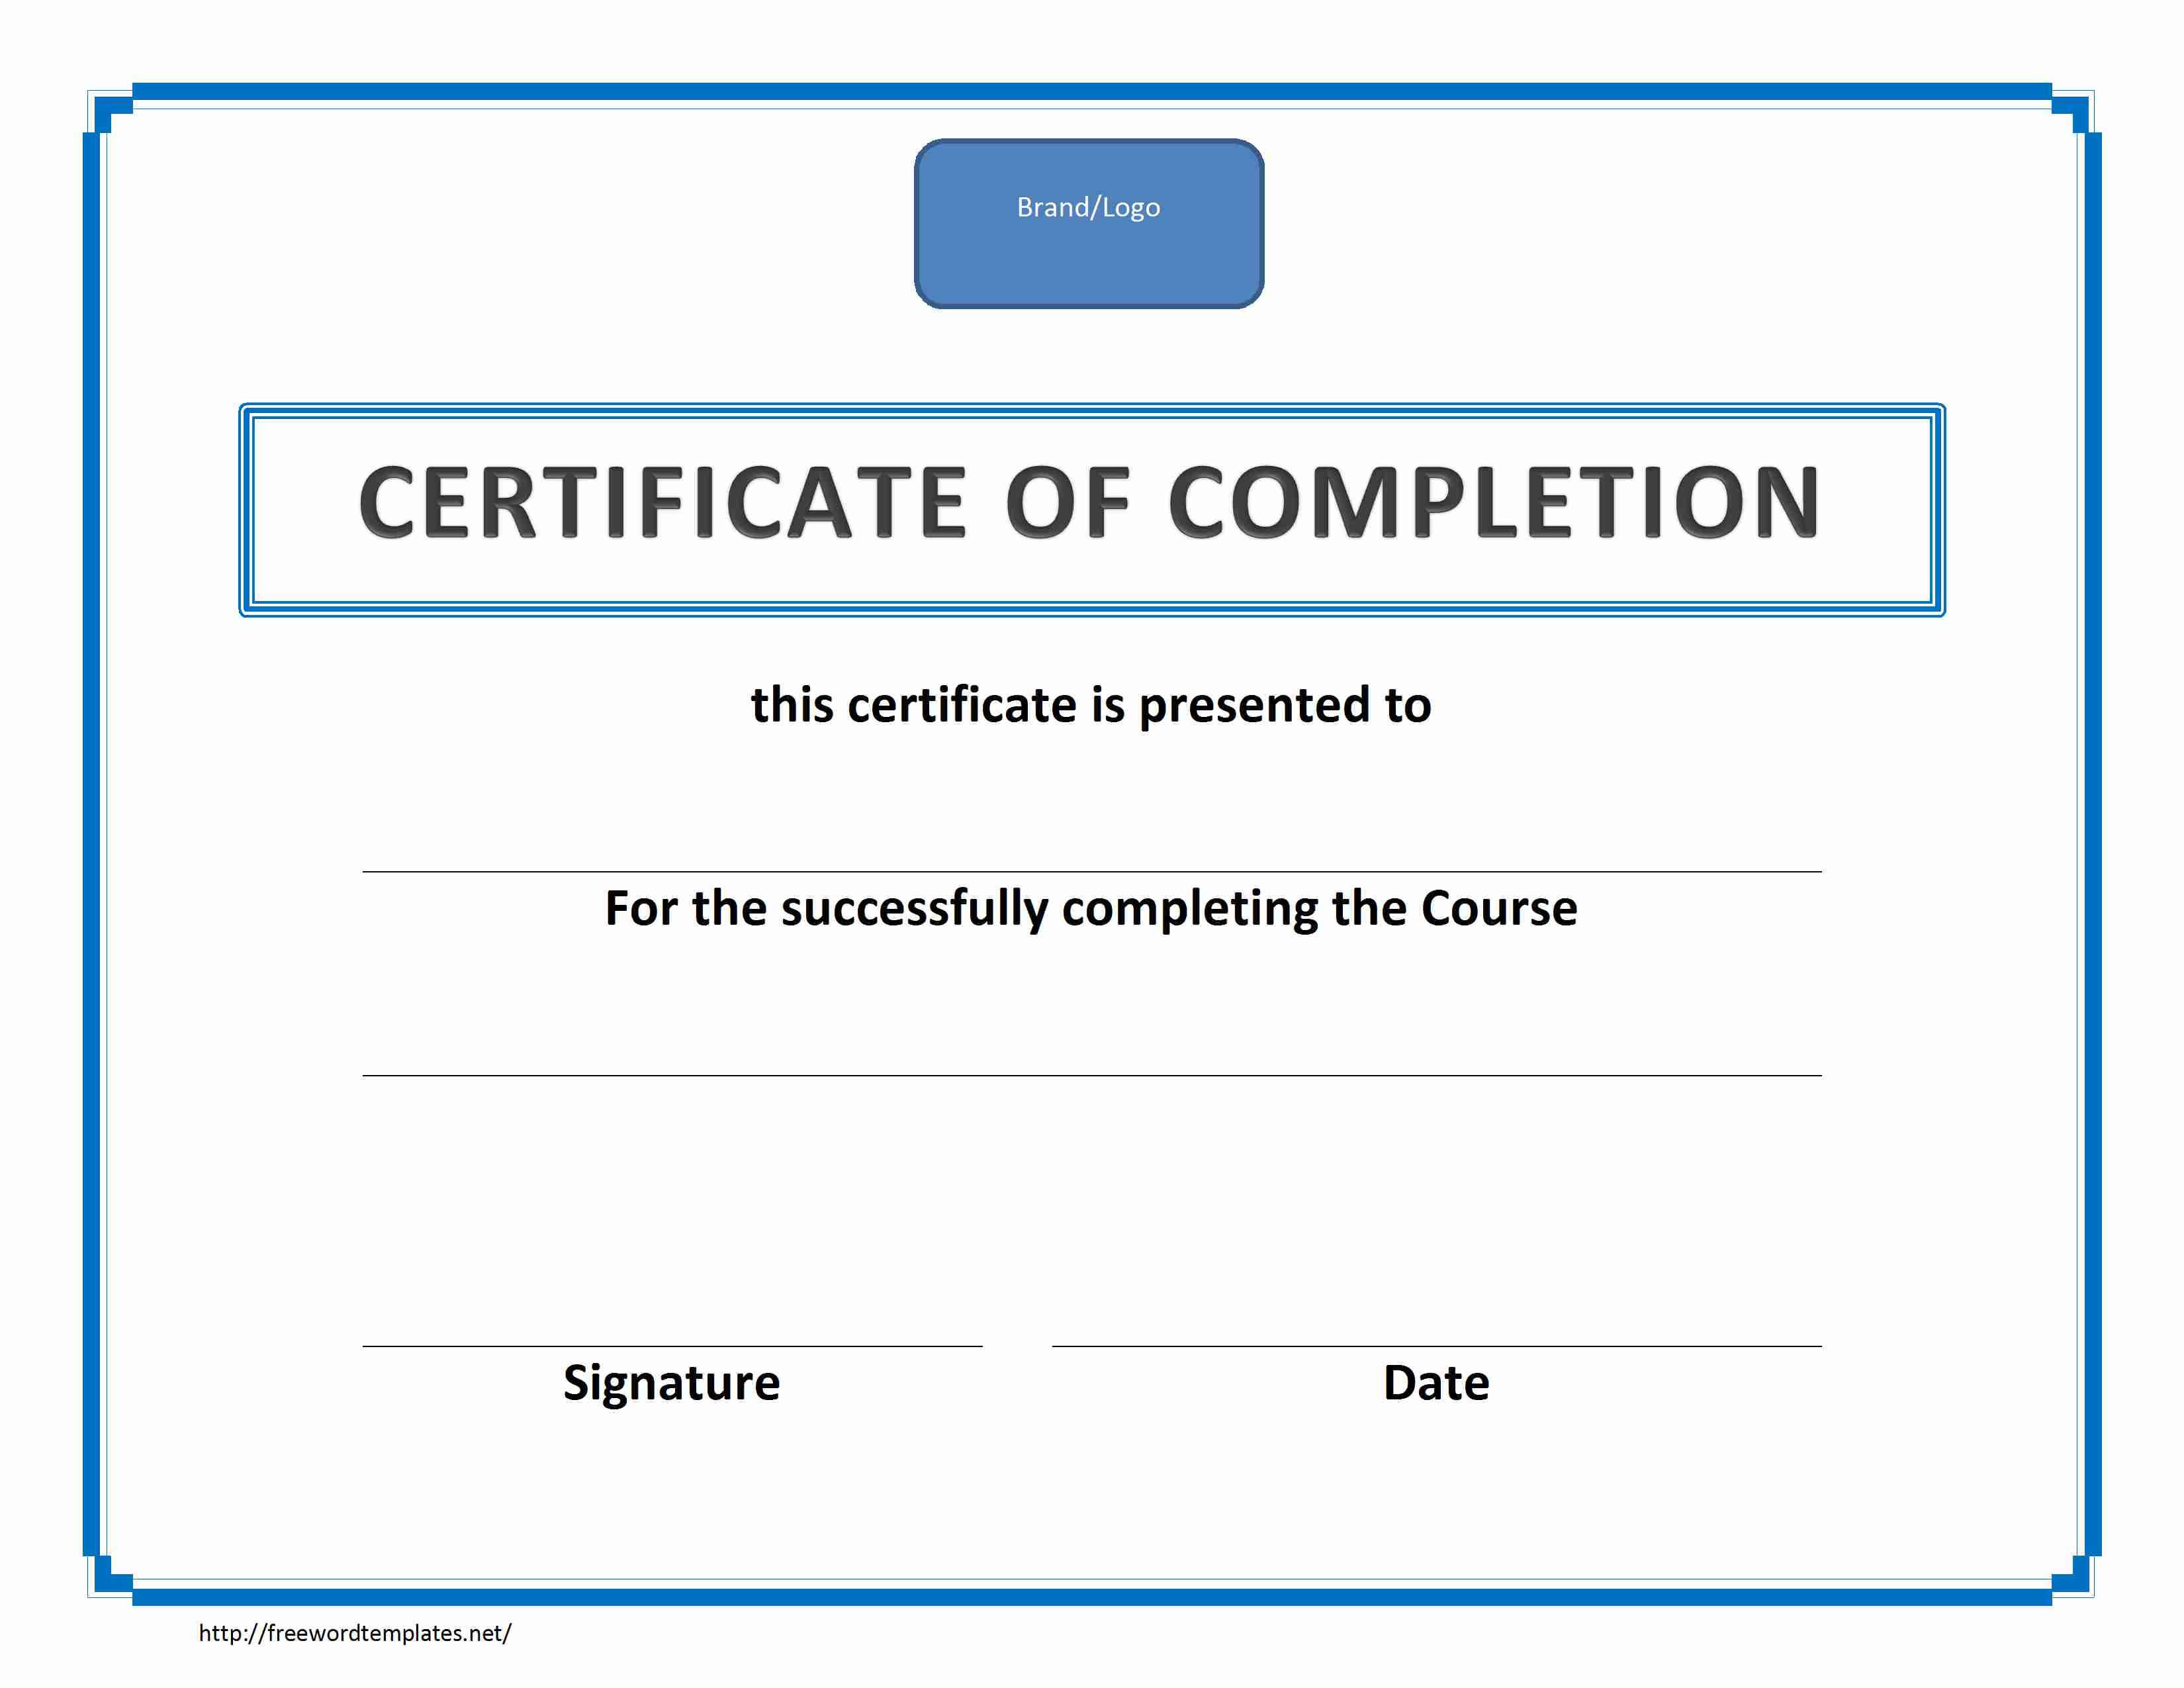 Workshop Certificate Archives | Freewordtemplates Throughout Workshop Certificate Template